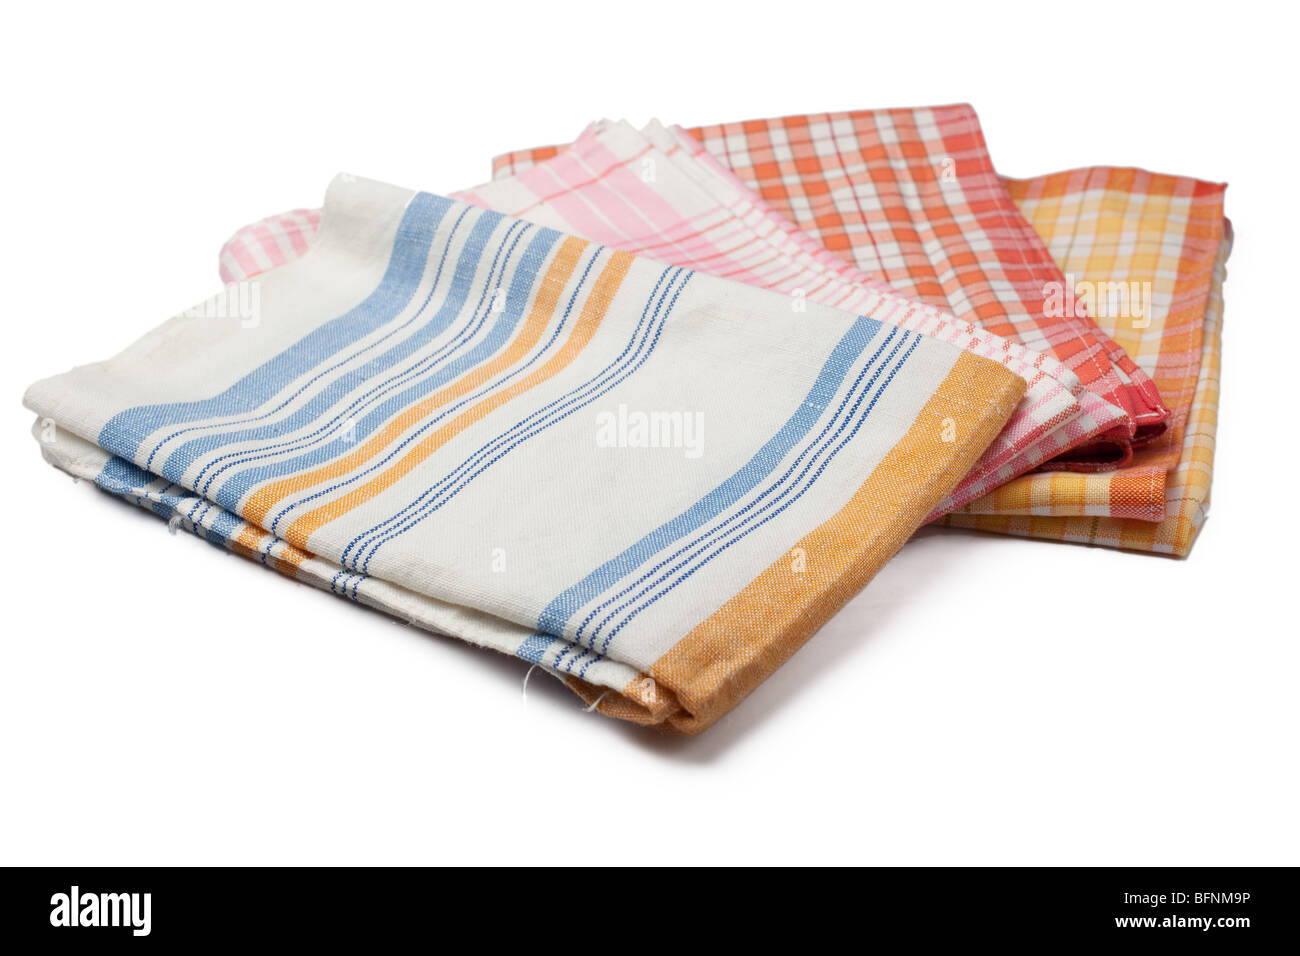 https://c8.alamy.com/comp/BFNM9P/kitchen-towels-on-white-background-BFNM9P.jpg